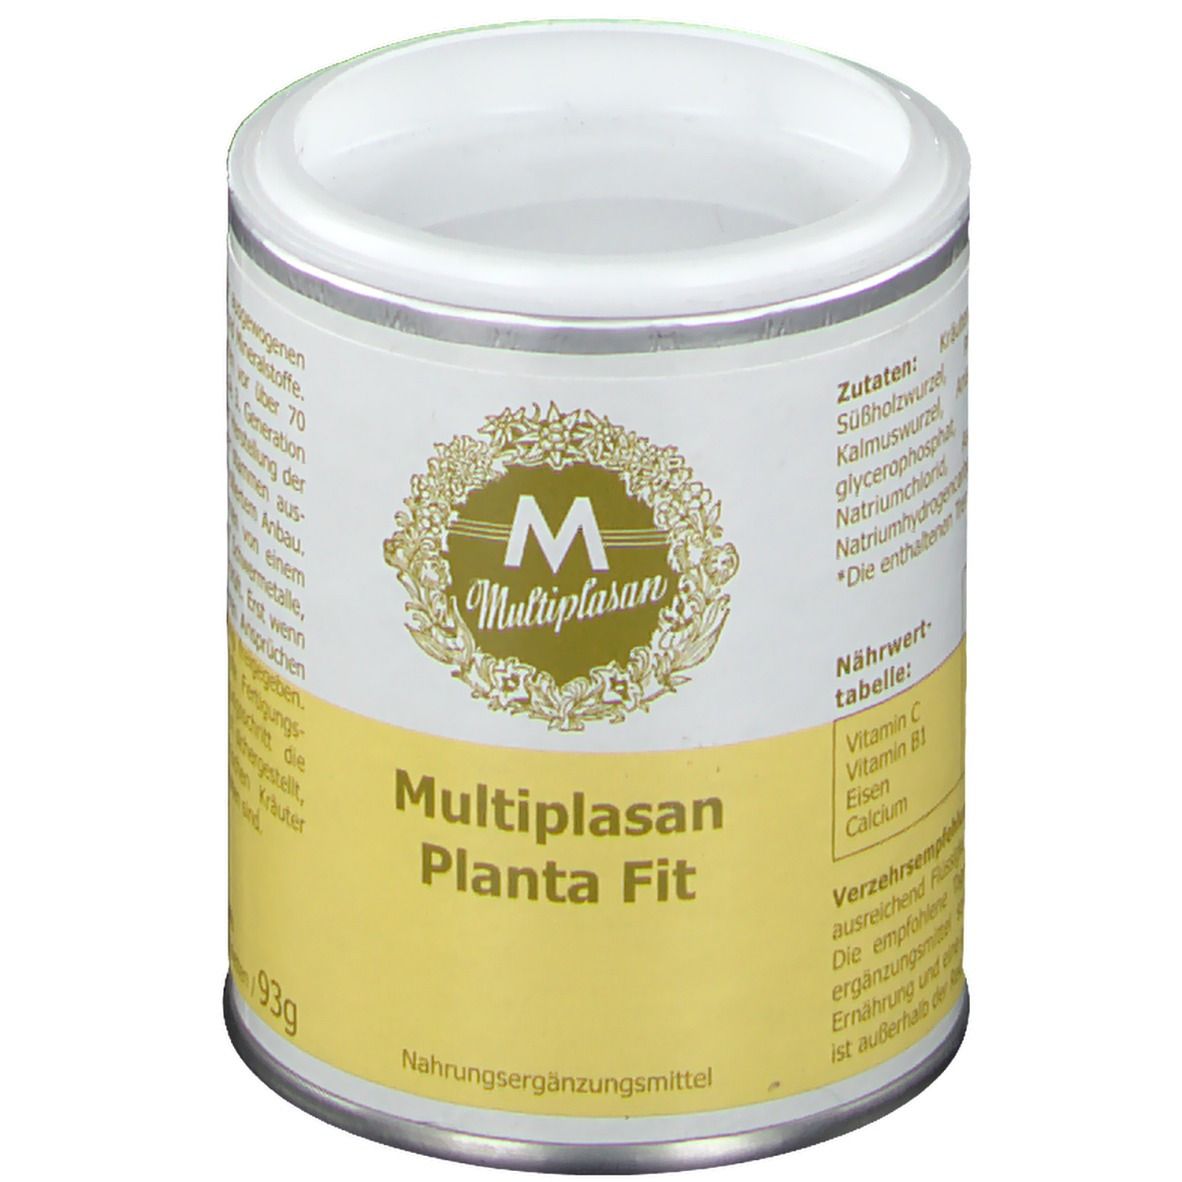 Multiplasan Planta Fit